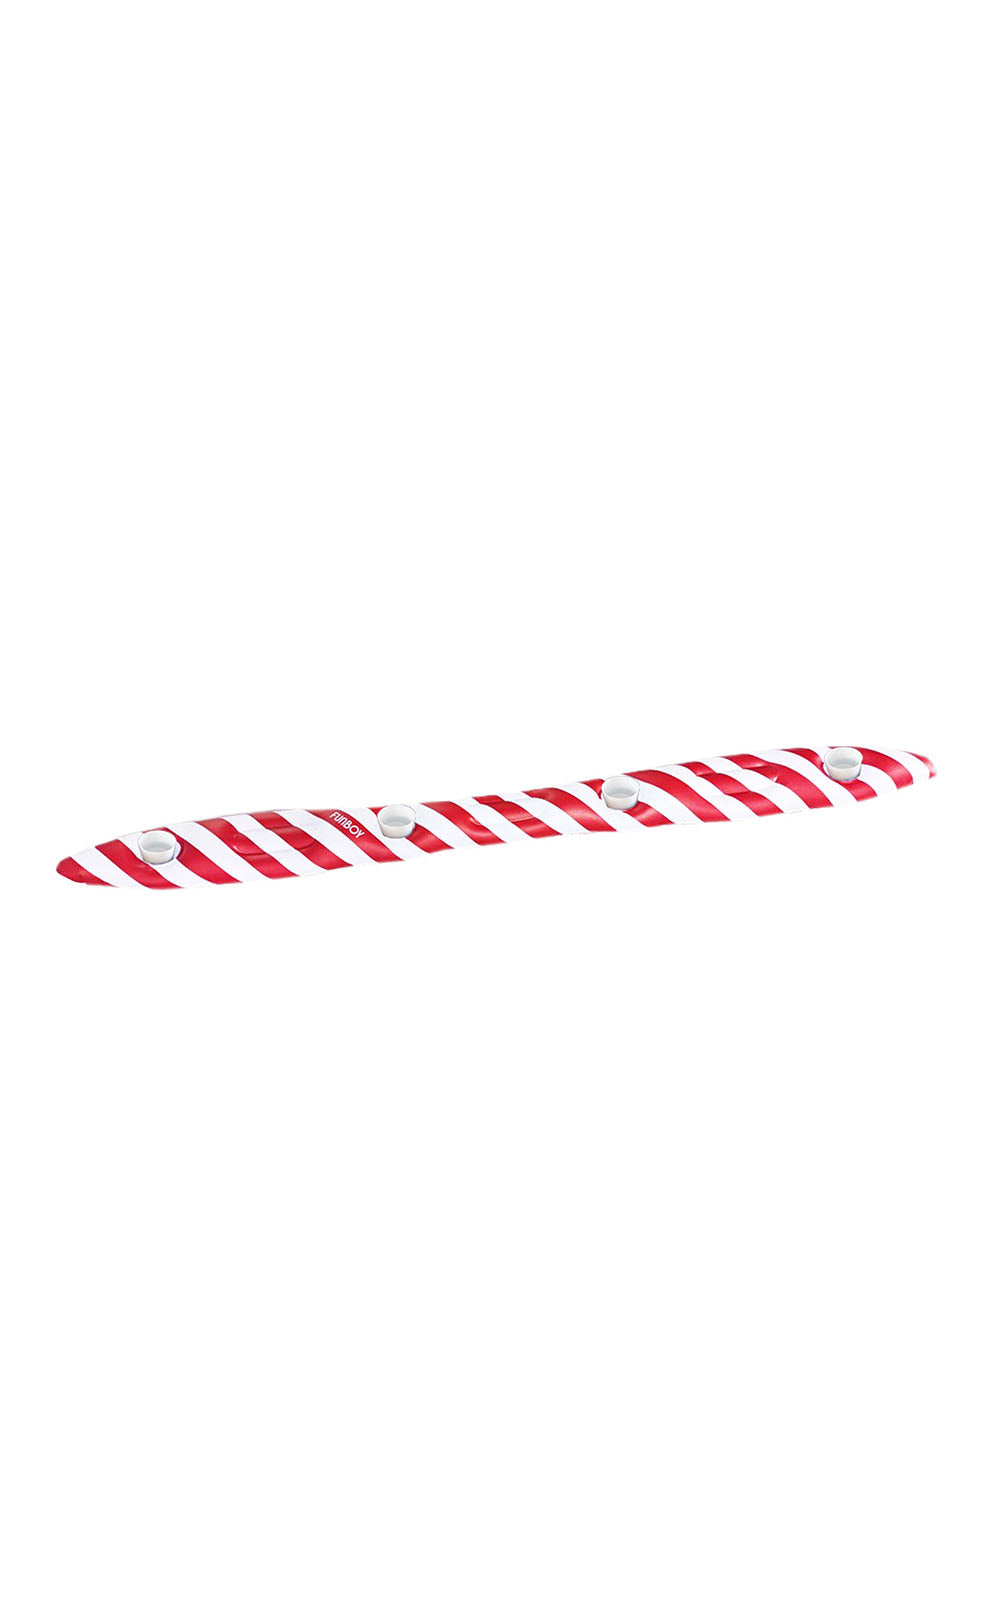 Shotski Cane Red and white striped